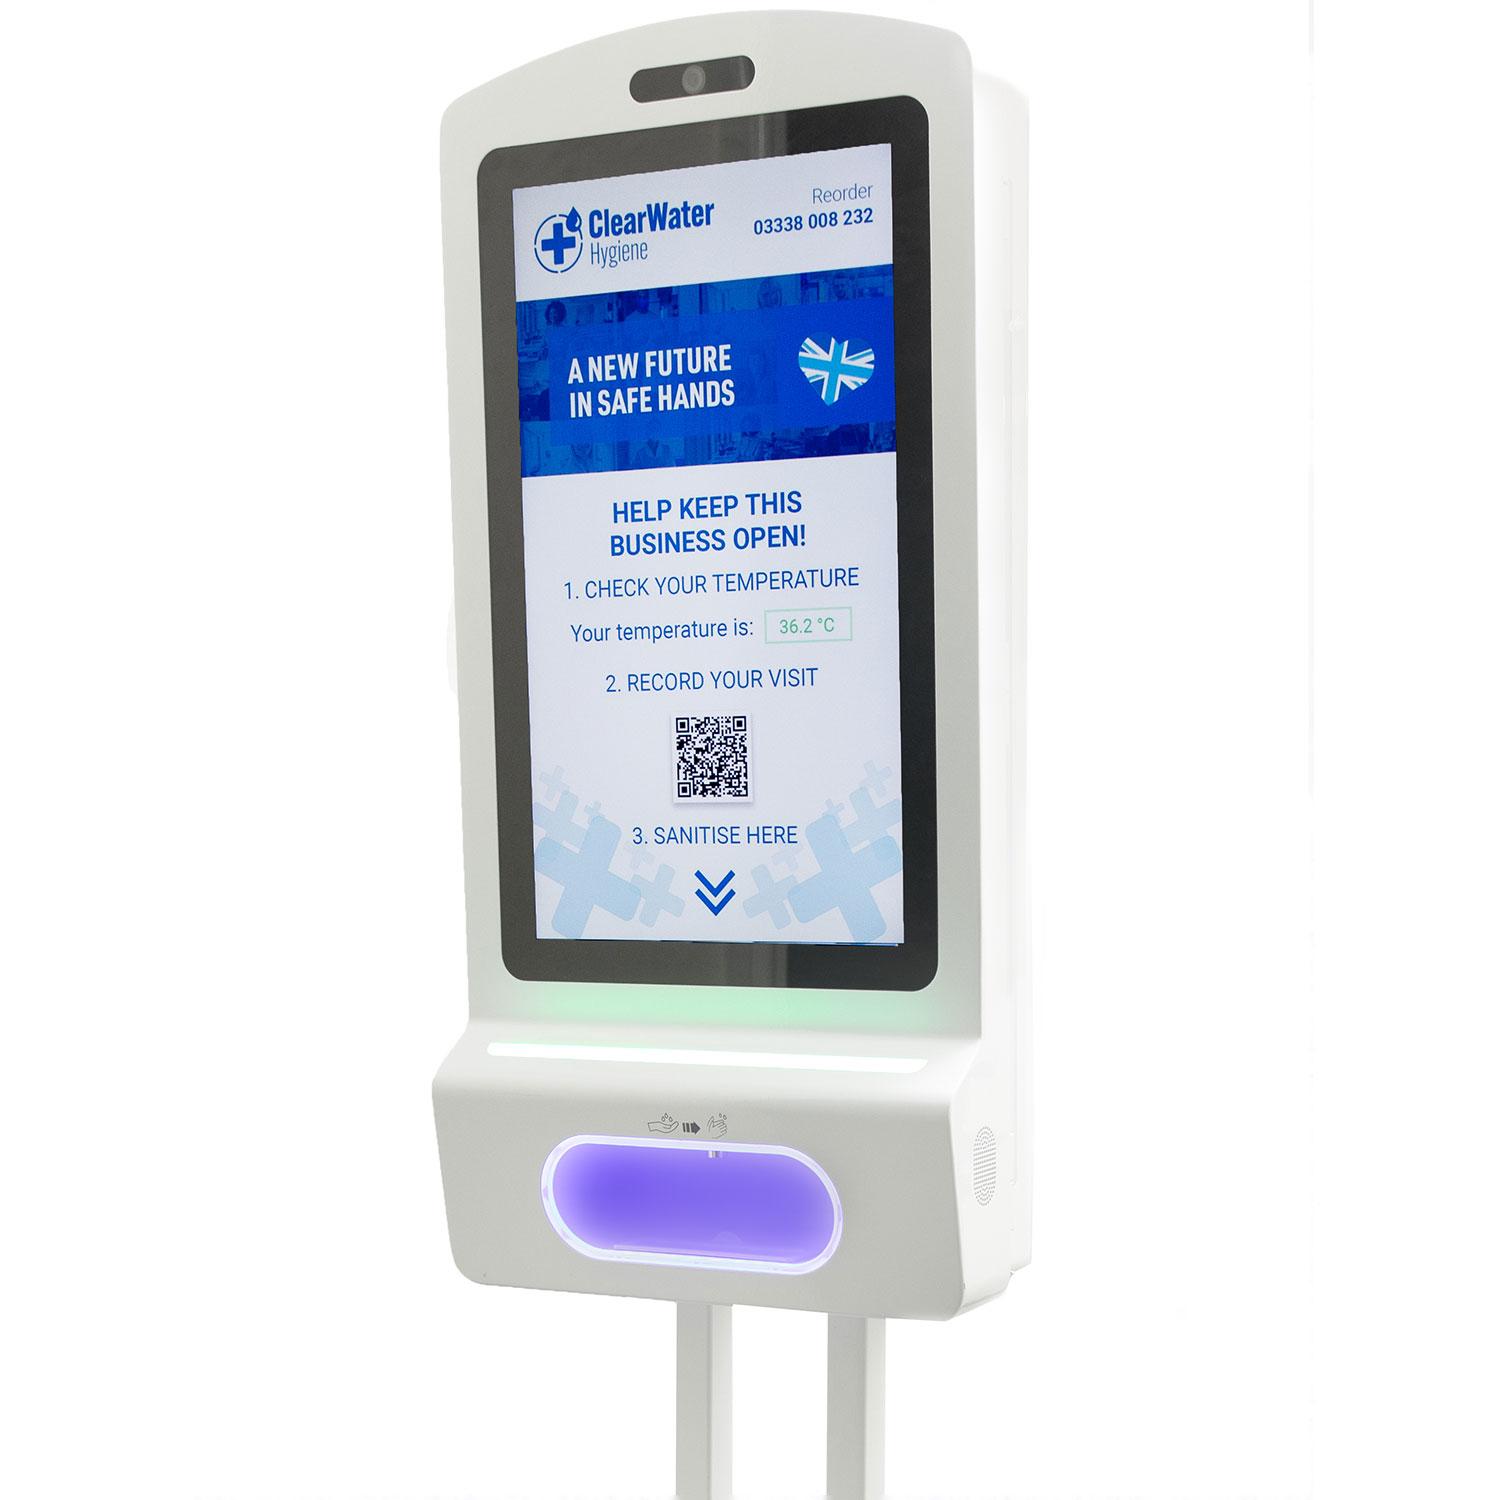 Advanced smart hand sanitiser dispenser, temperature checks